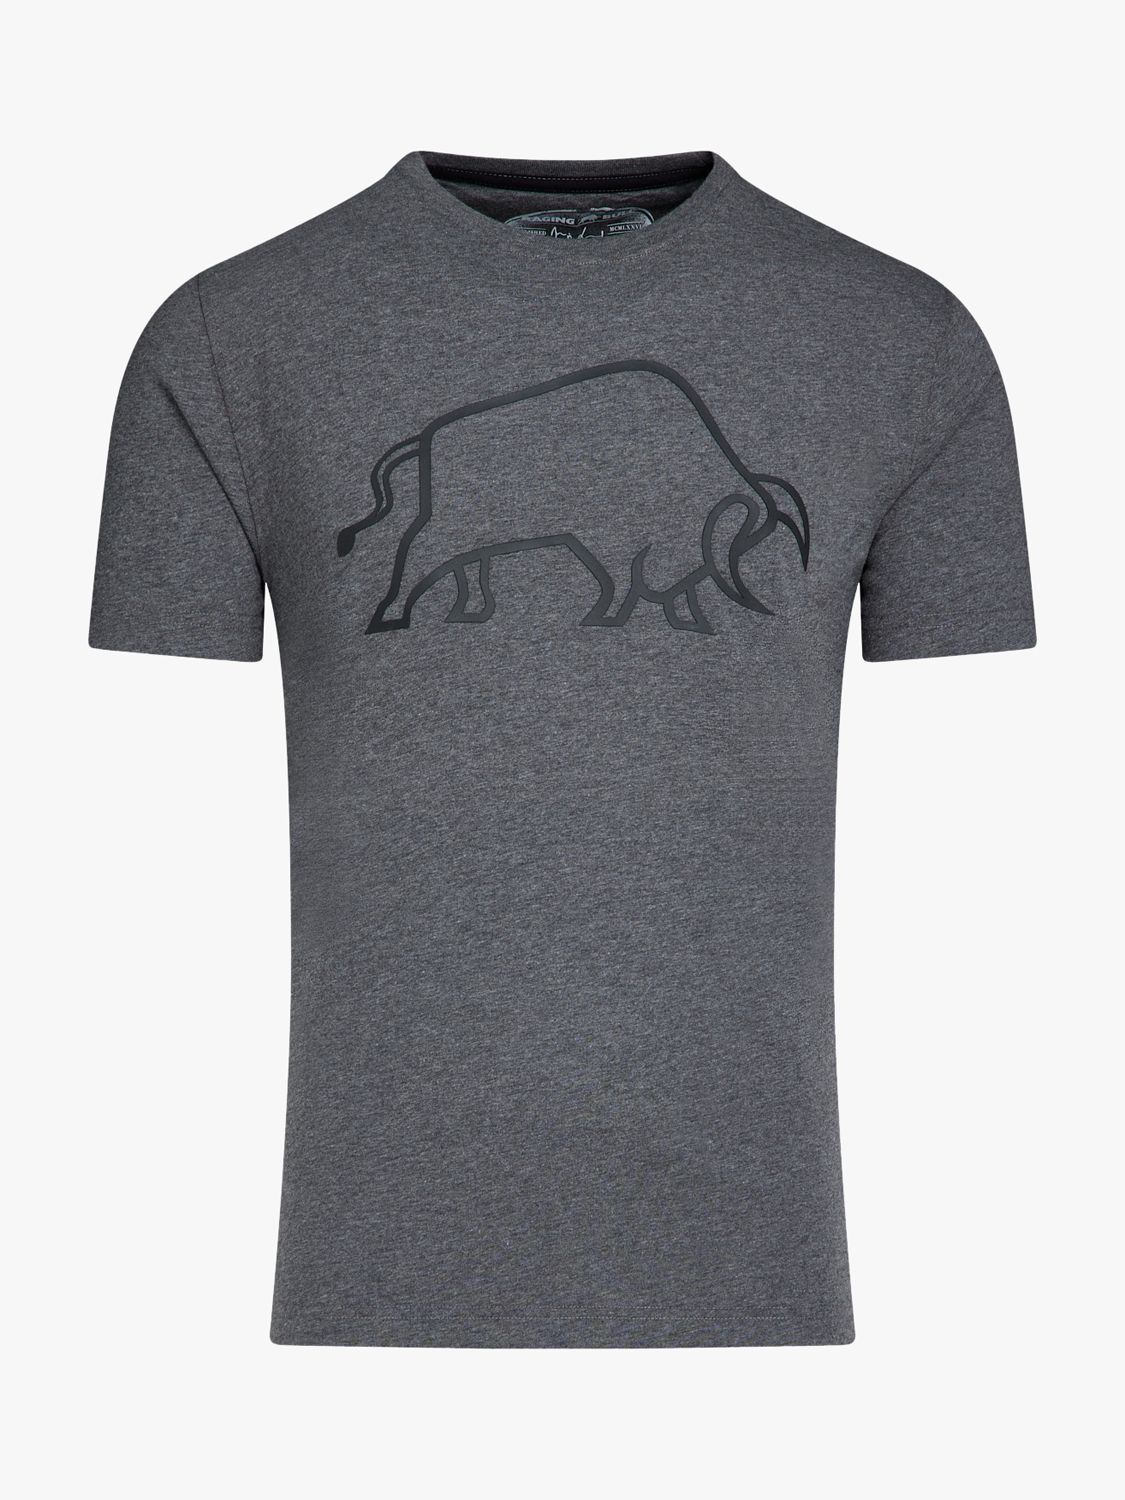 Buy Raging Bull High Build Bull T-Shirt, Charcoal Online at johnlewis.com